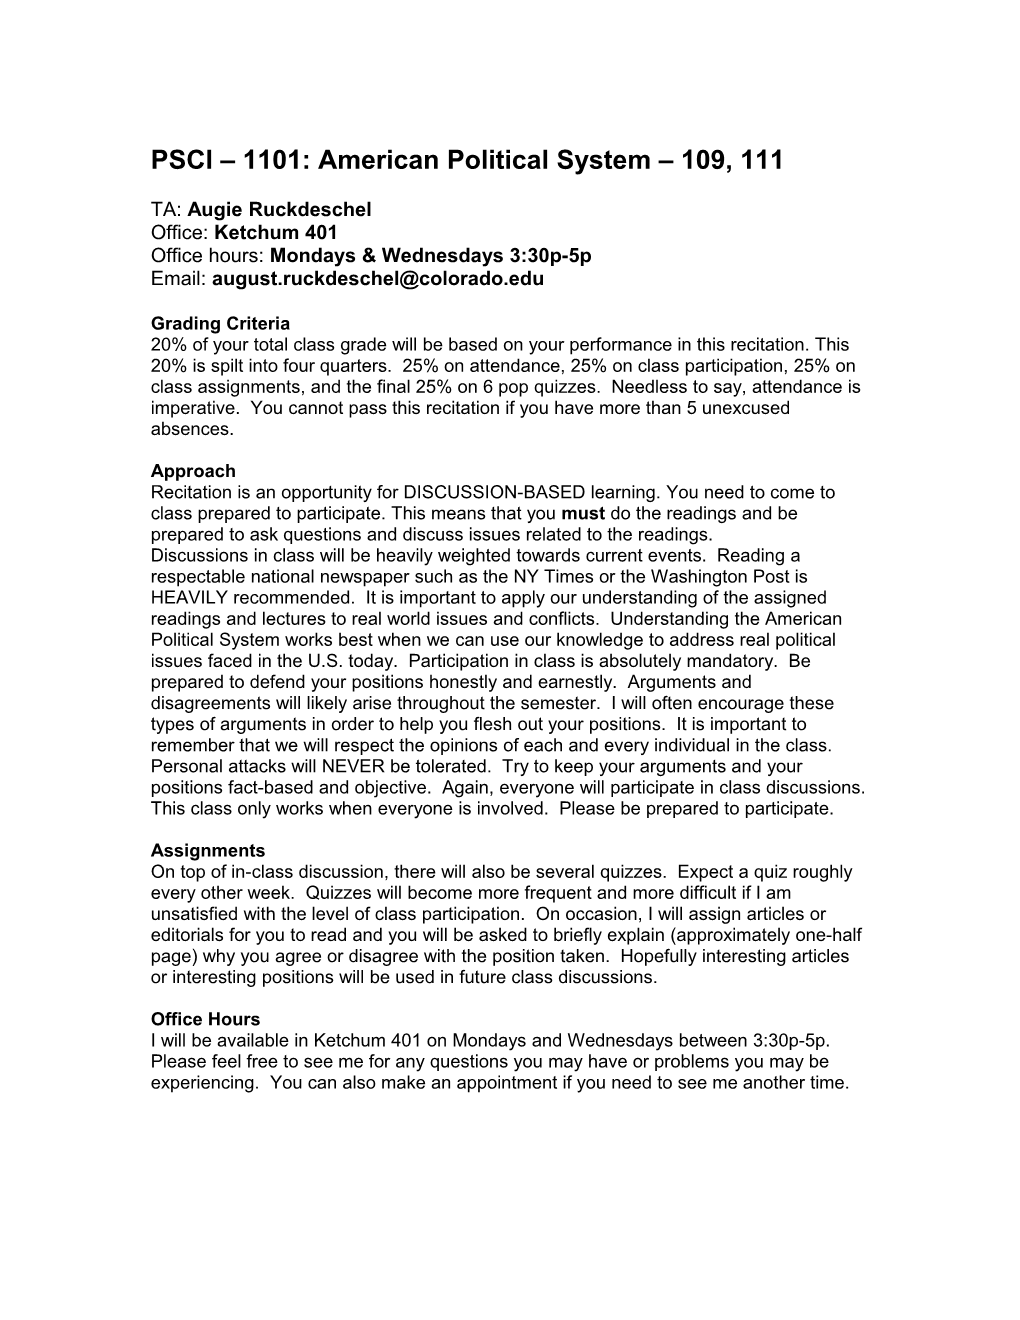 PSCI 1101: American Political System